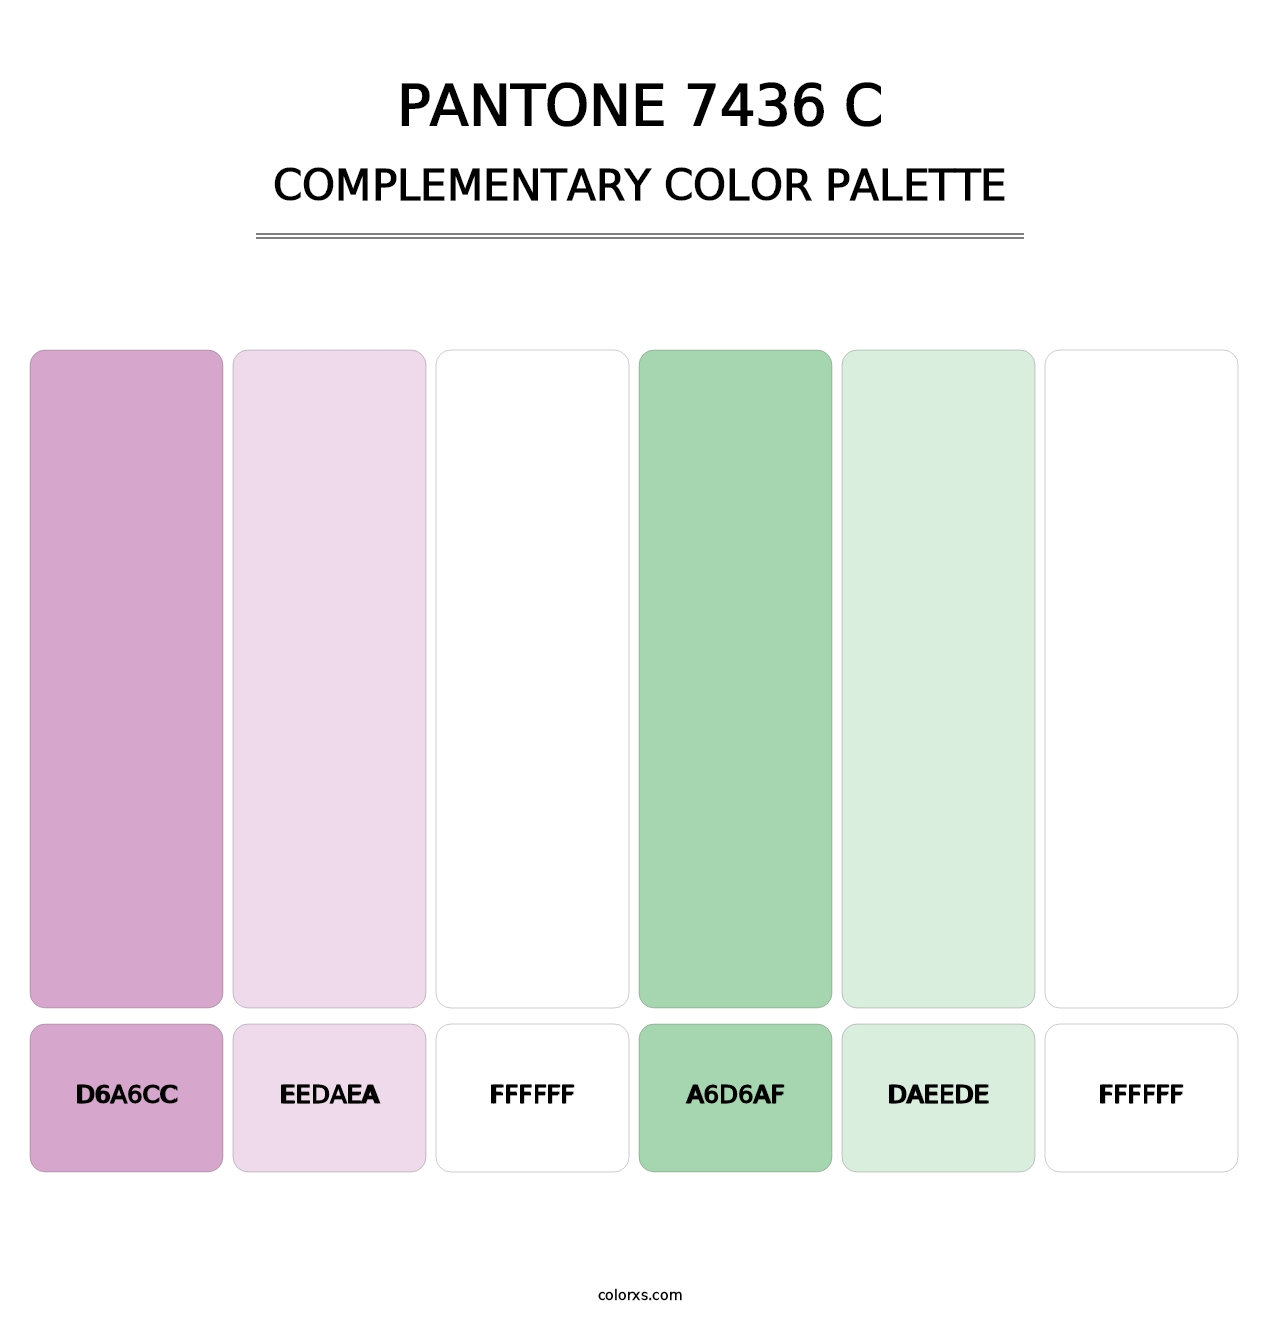 PANTONE 7436 C - Complementary Color Palette